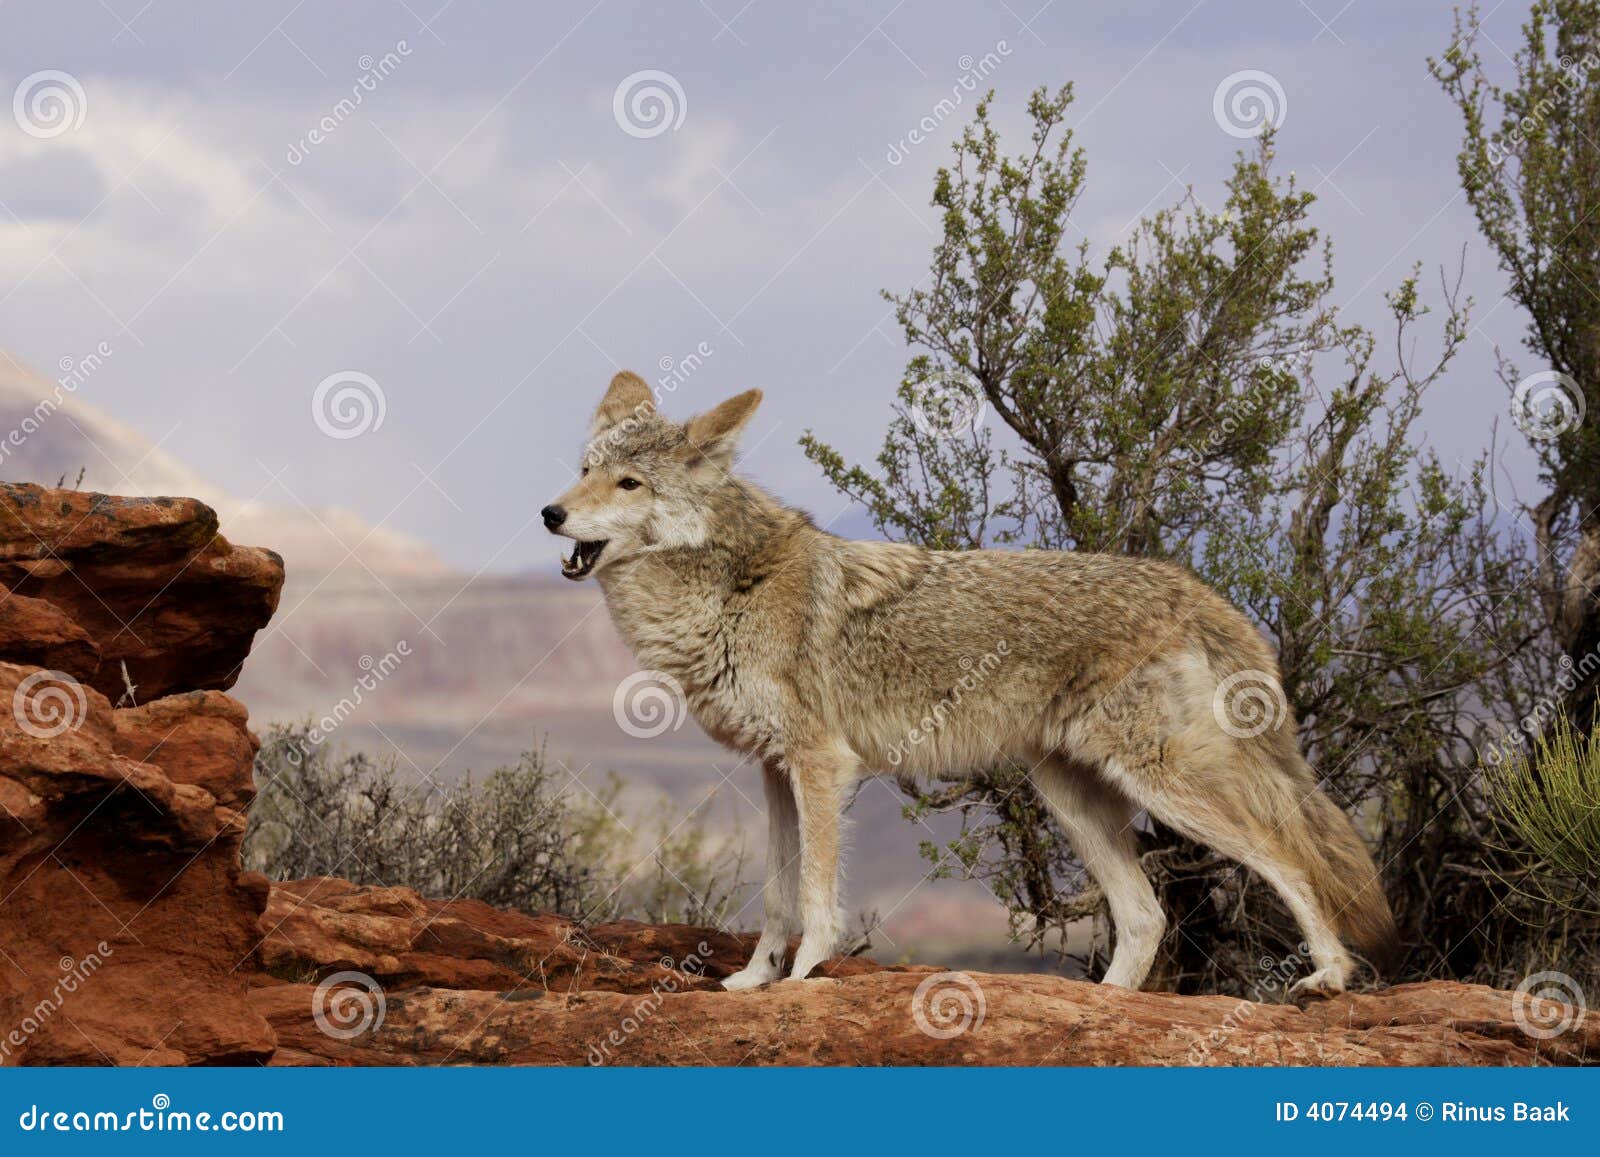 coyote yelping